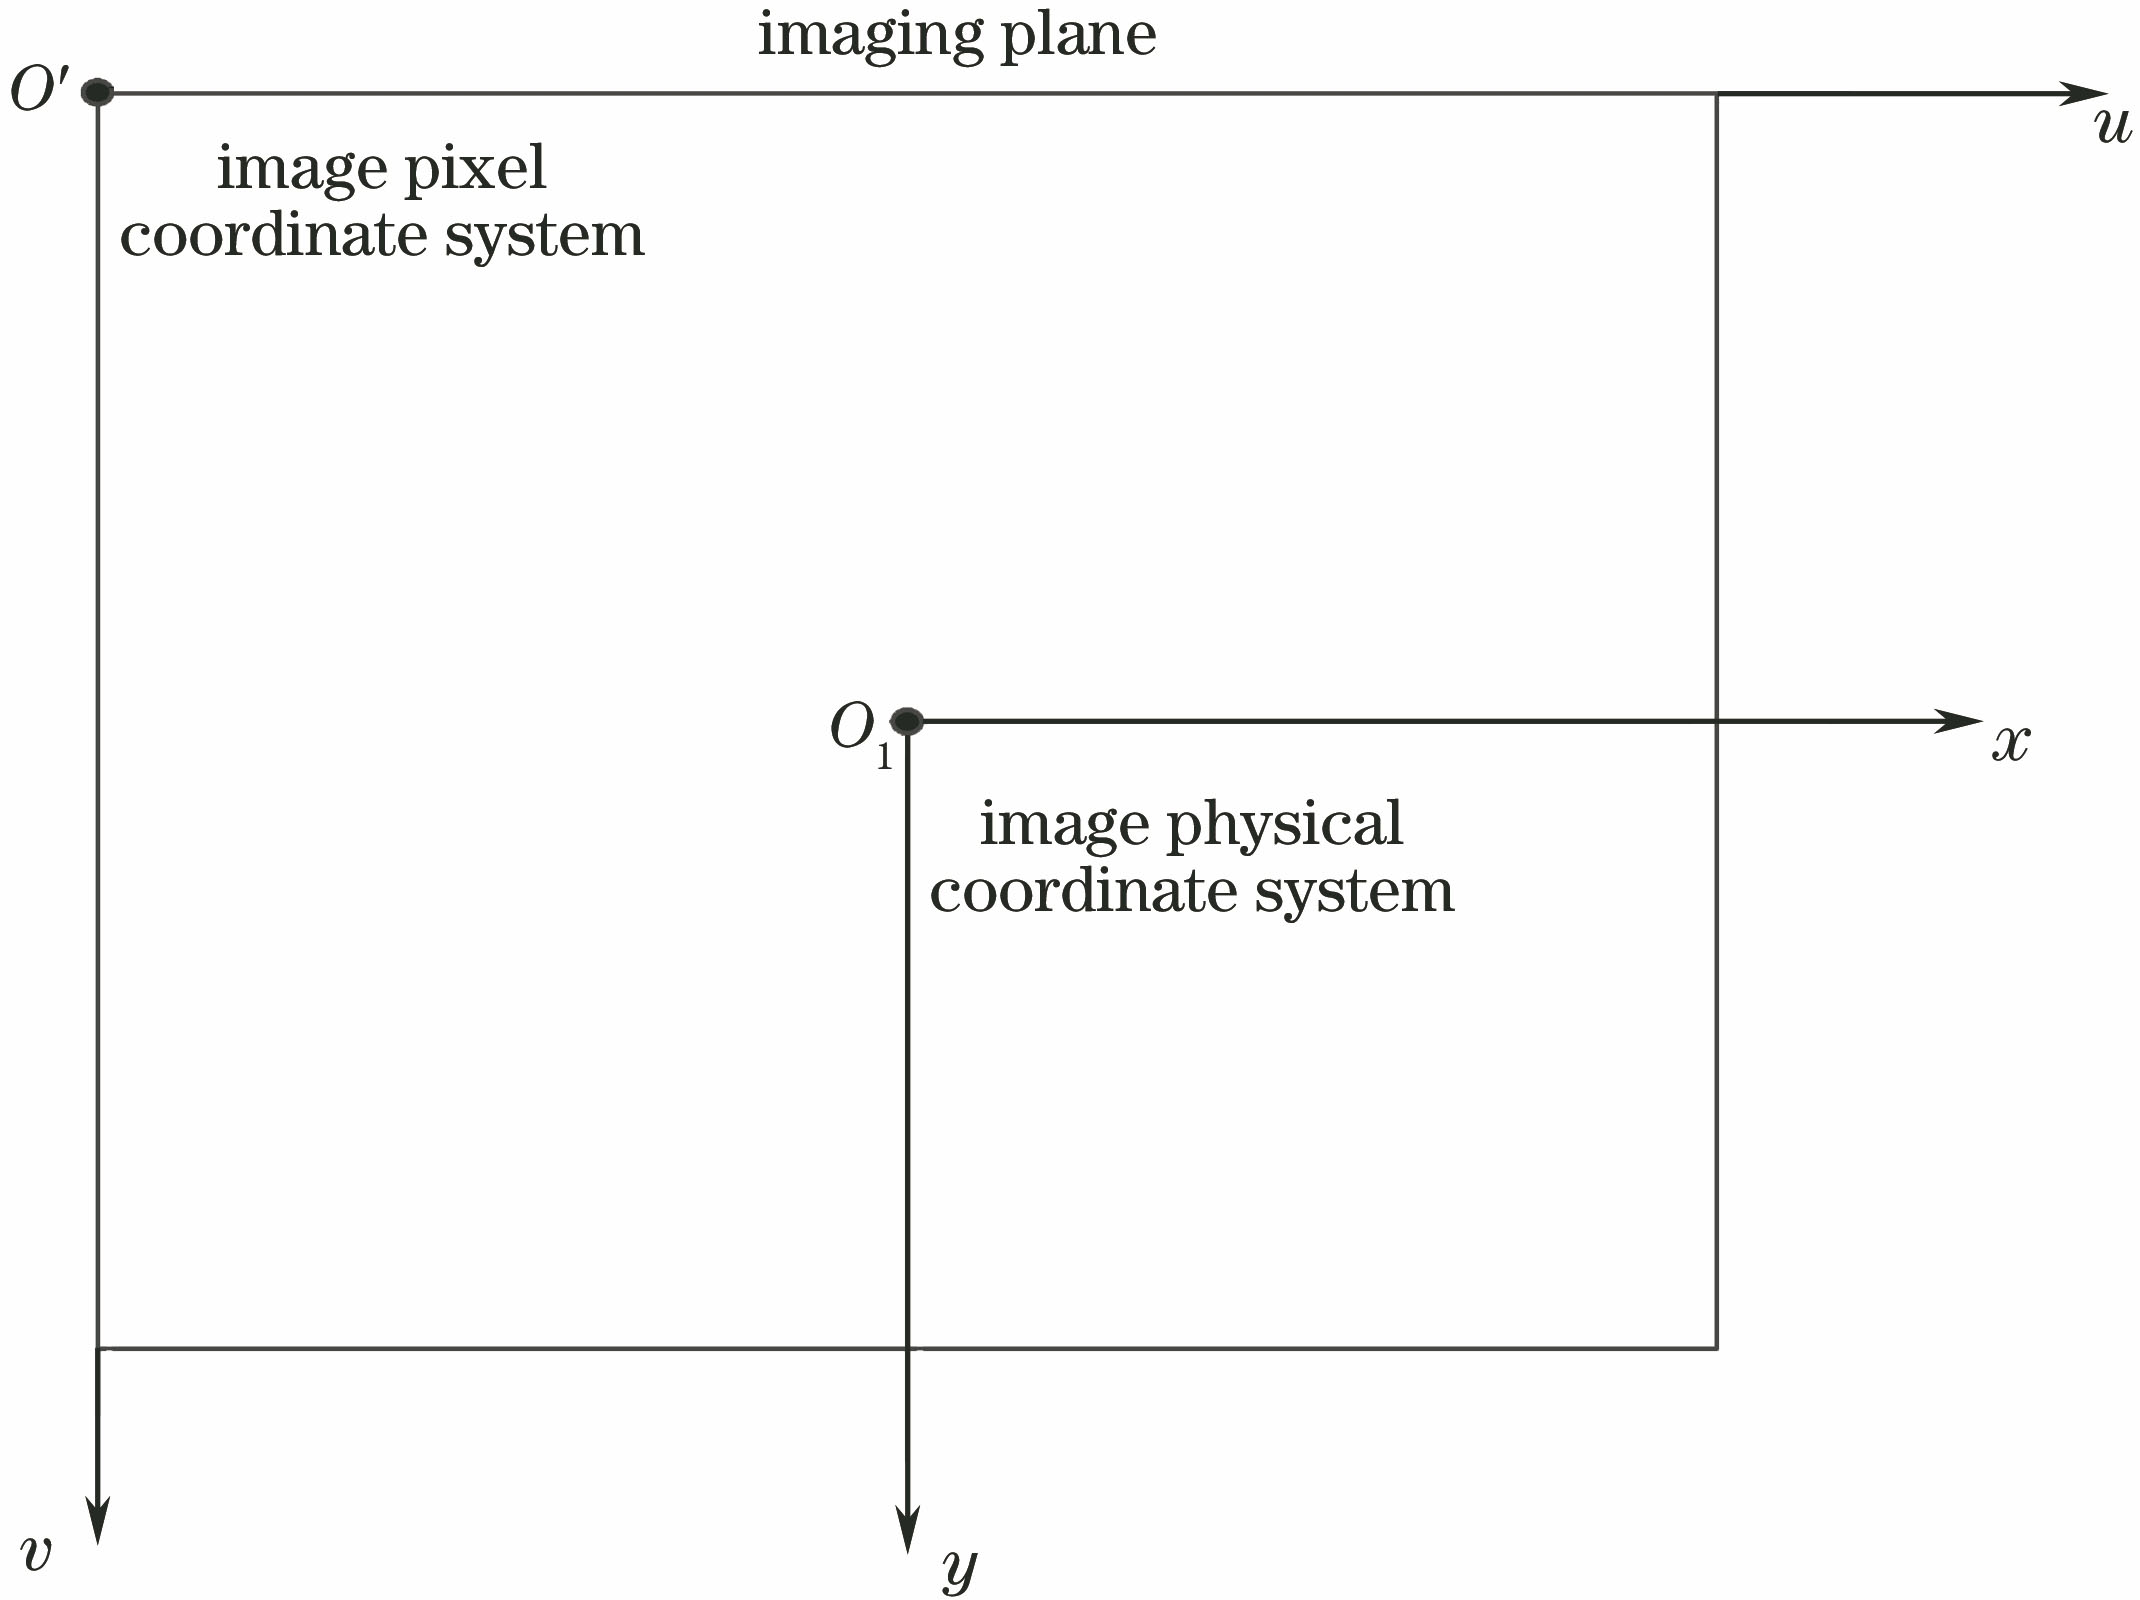 Image pixel coordinate system